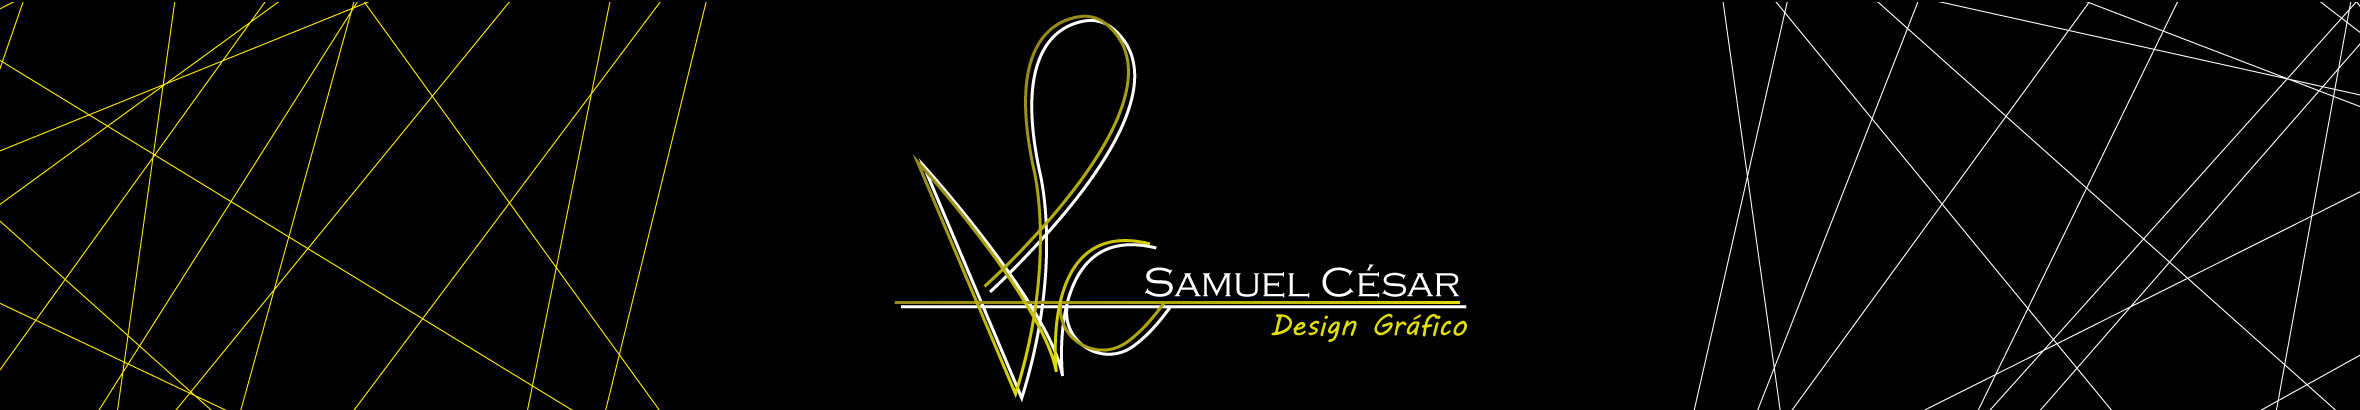 Baner profilu użytkownika Samuel César